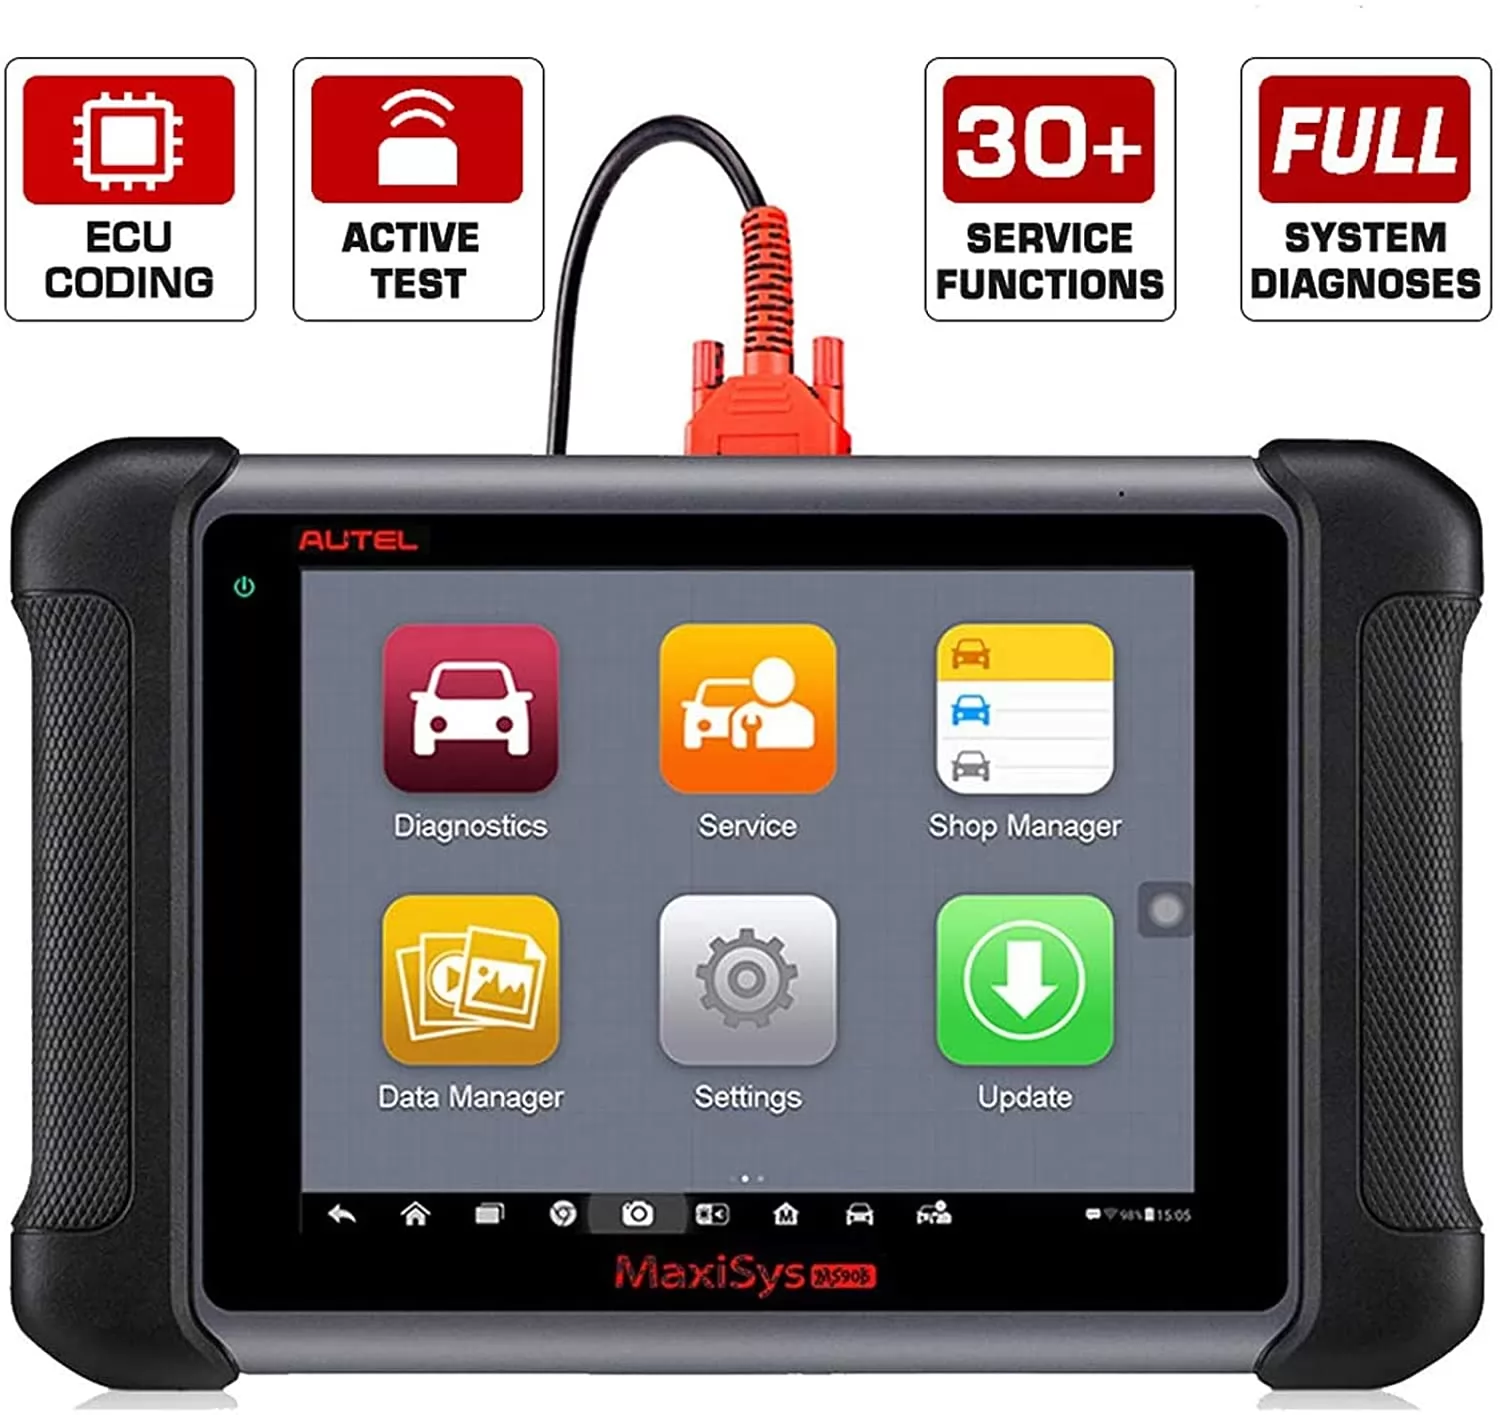 Autel MaxiSys MS906 Auto Diagnostic Tool with Bi-Directional Control, Key Fob Programming, ECU Coding, ABS Bleeding Brake